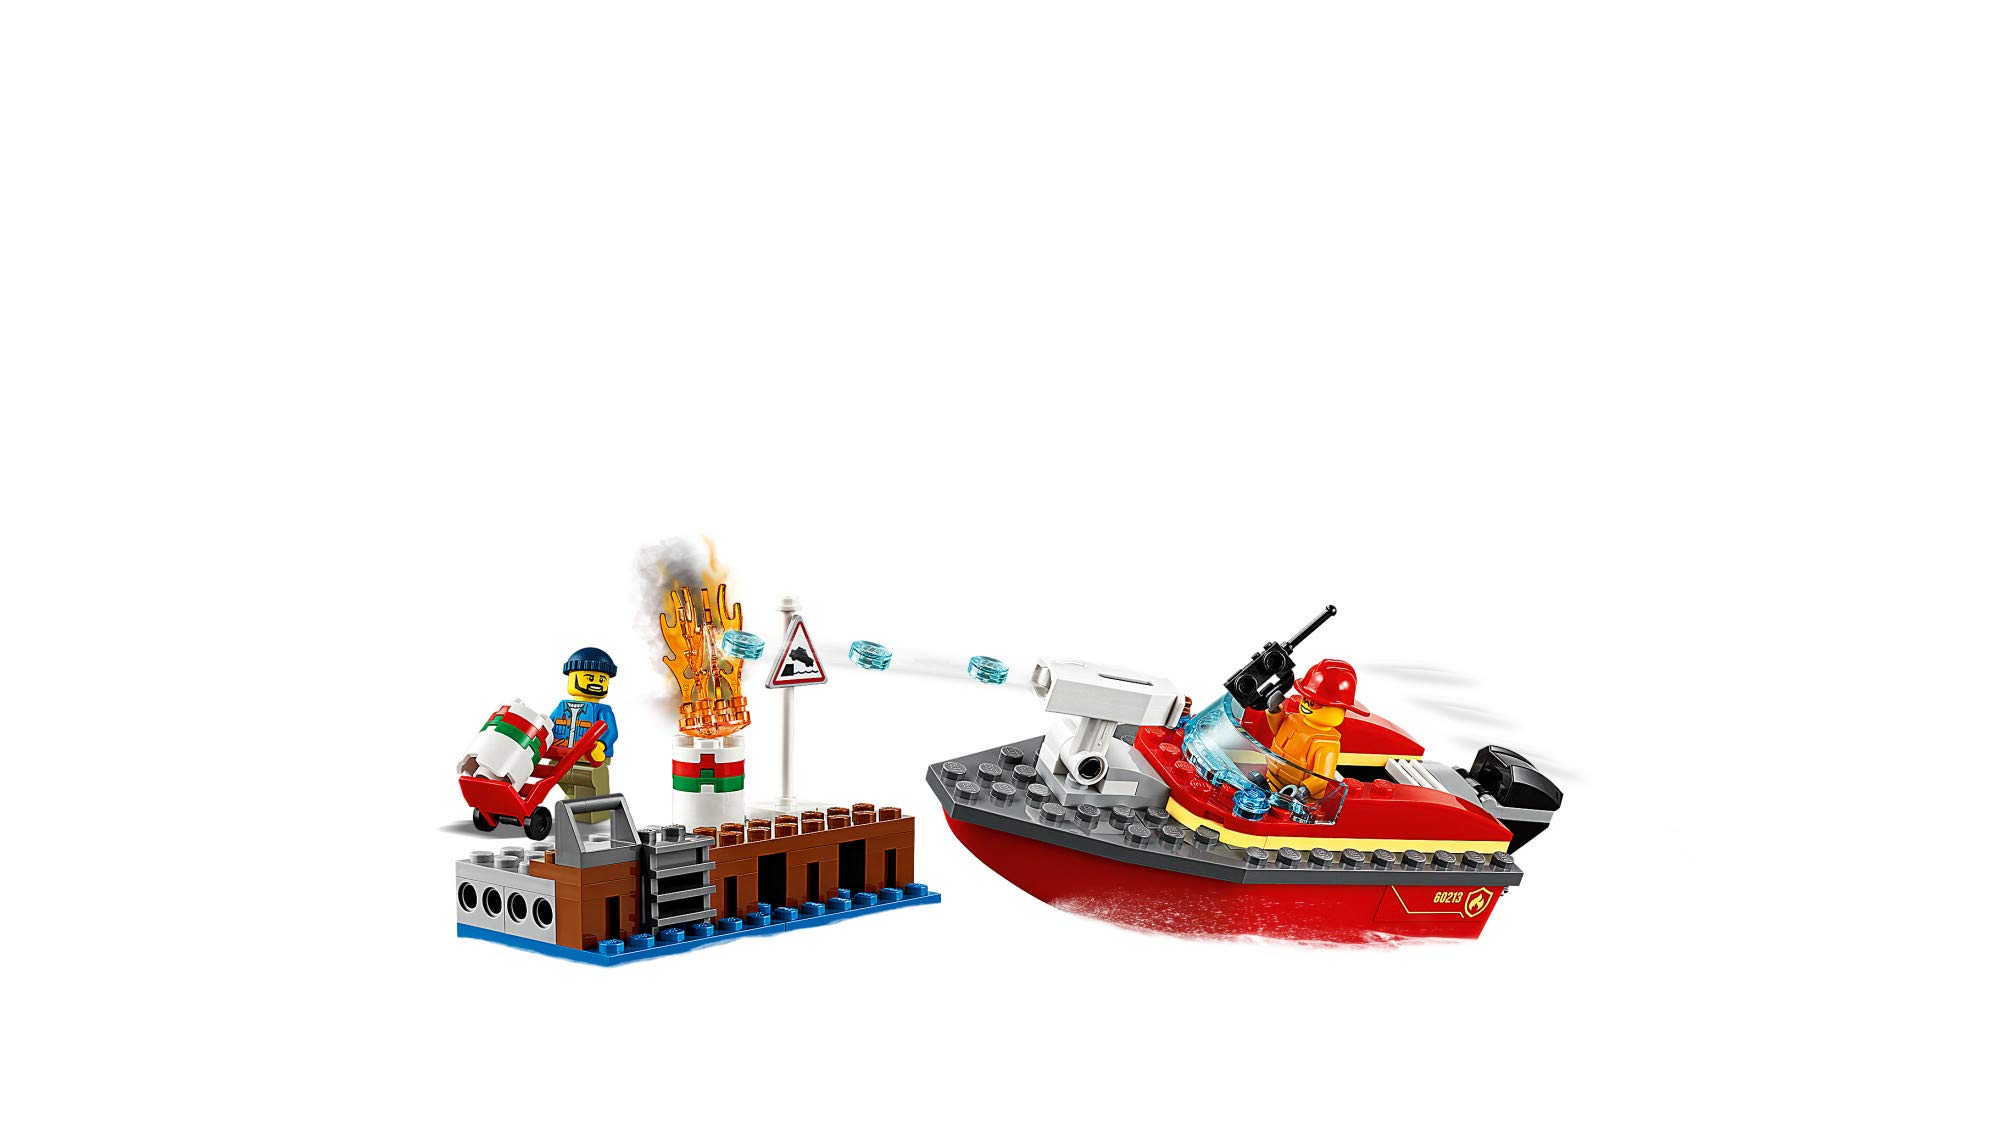 LEGO City Dock Side Fire 60213 Building Kit (97 Pieces)